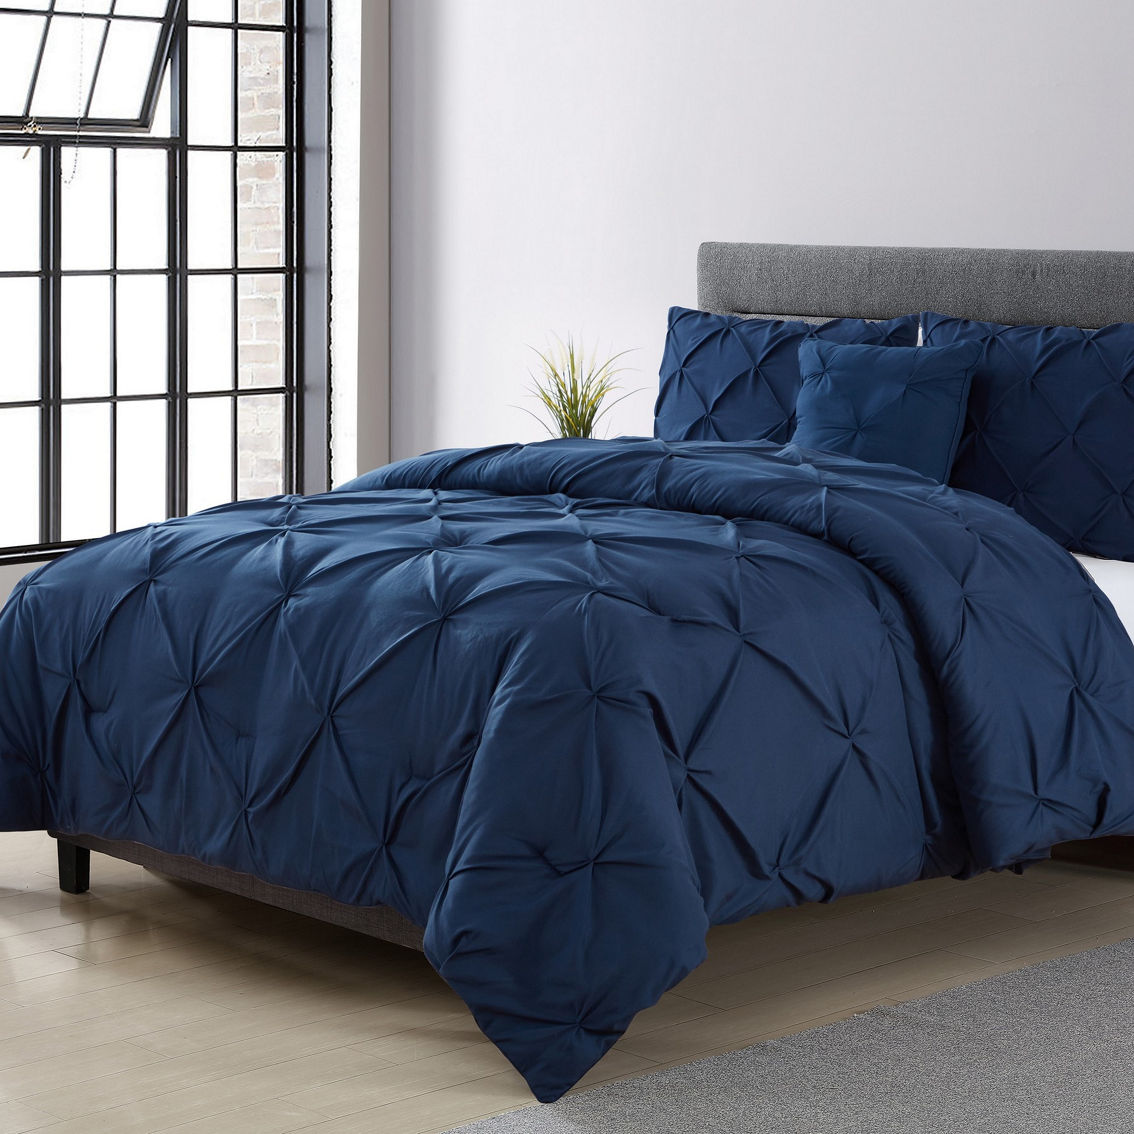 VCNY Home Carmen Pintuck Comforter Set - Image 2 of 5